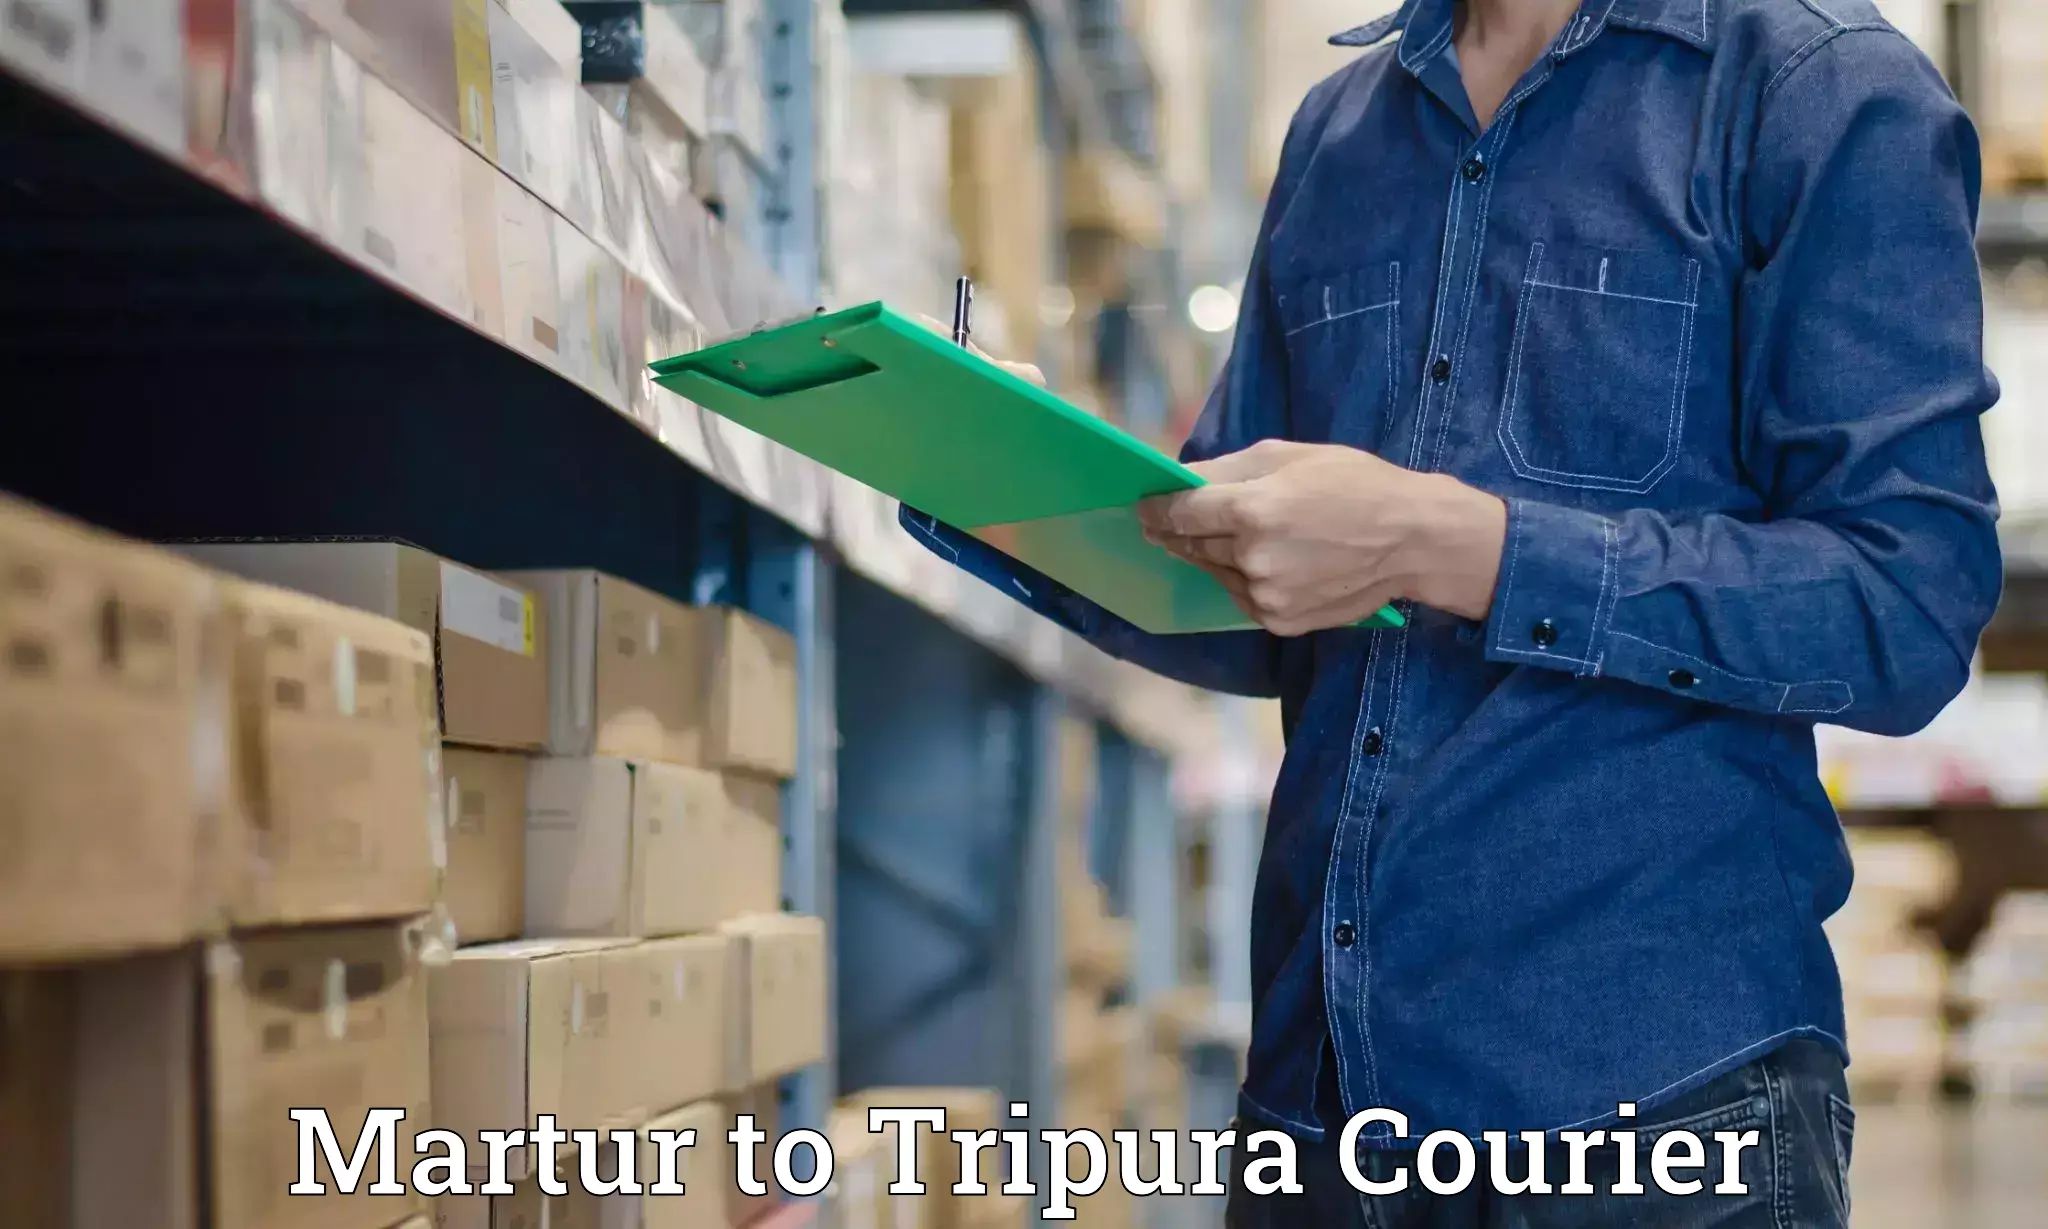 High-priority parcel service Martur to West Tripura